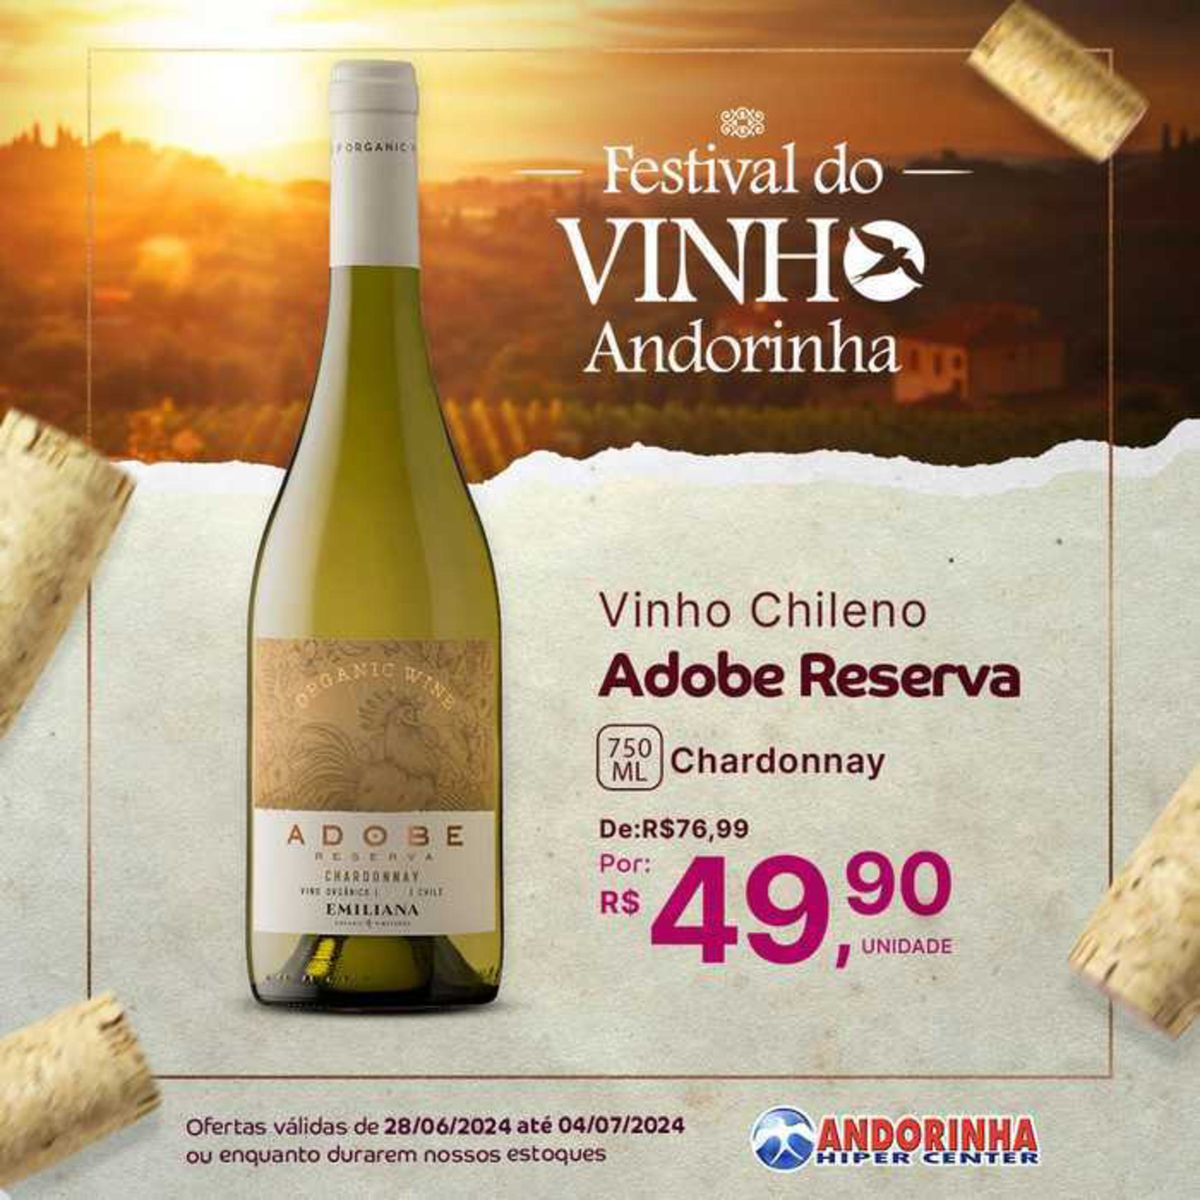 Vinho Chileno Adobe Reserva Chardonnay por R$49,99